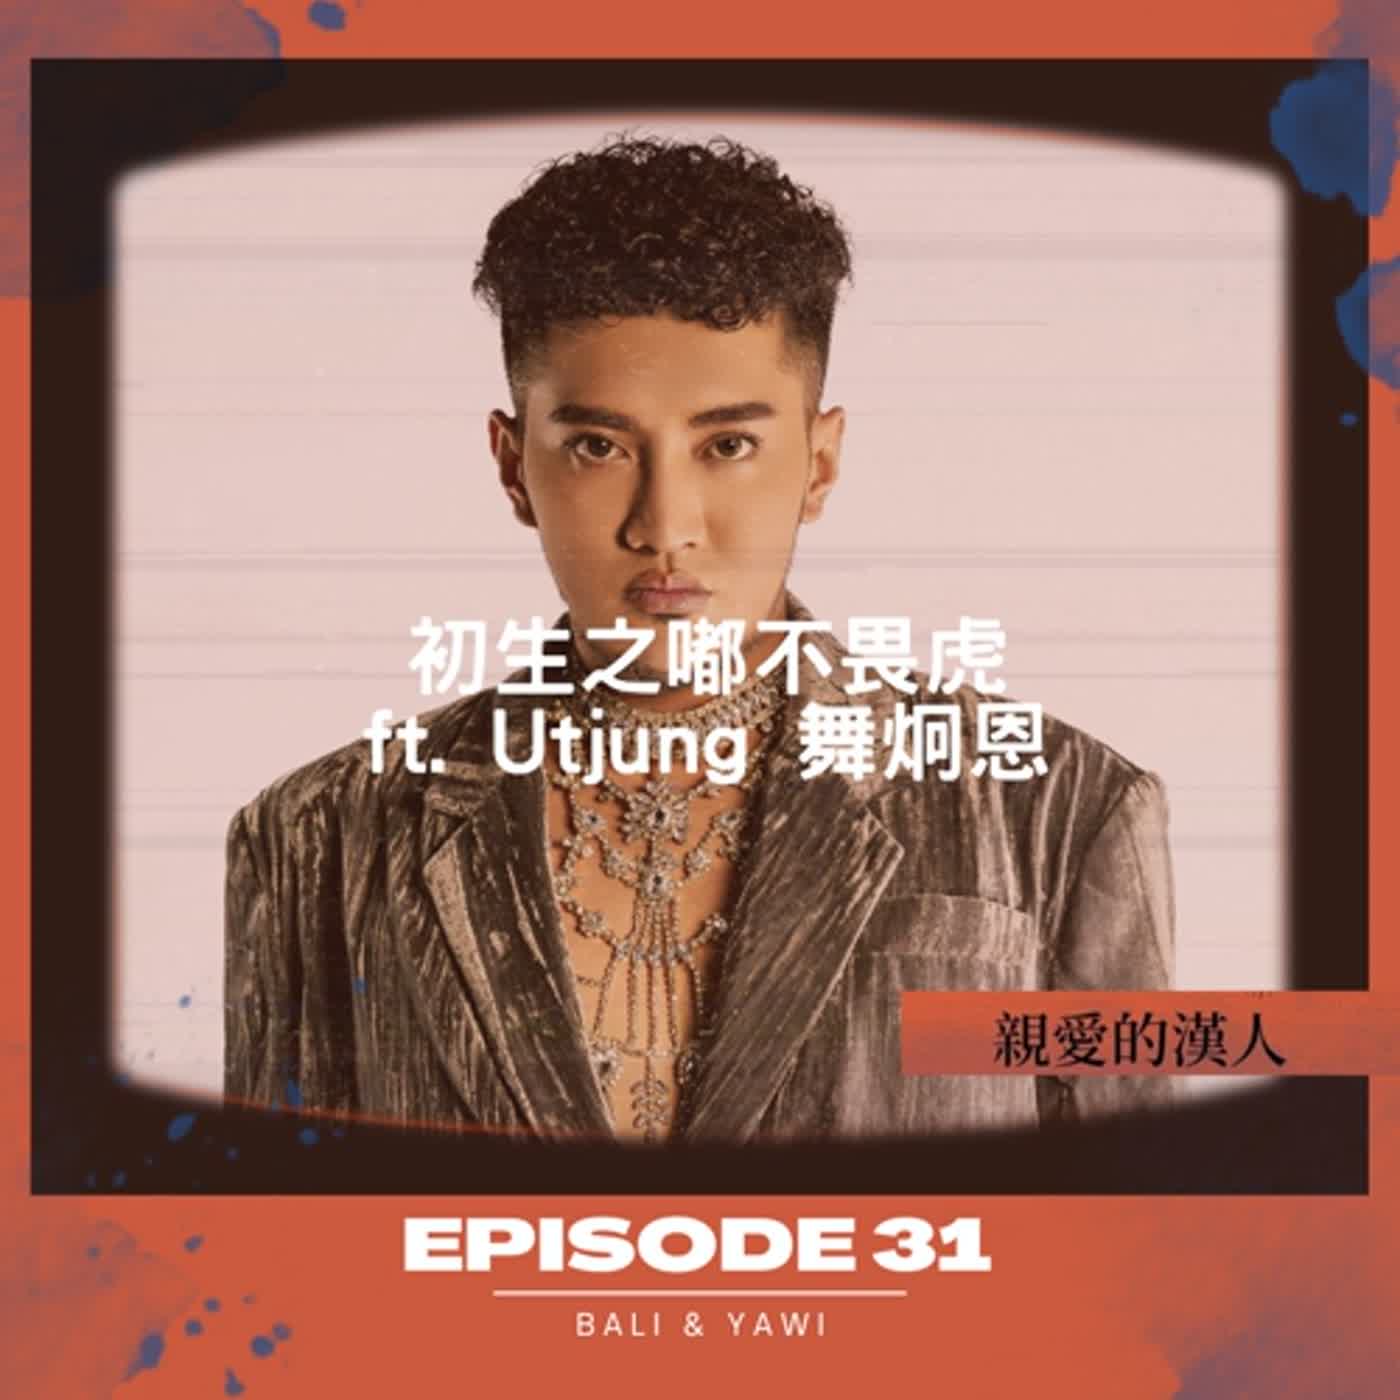 Episode 31：初生之「嘟」不畏虎 ft. Utjung 舞炯恩